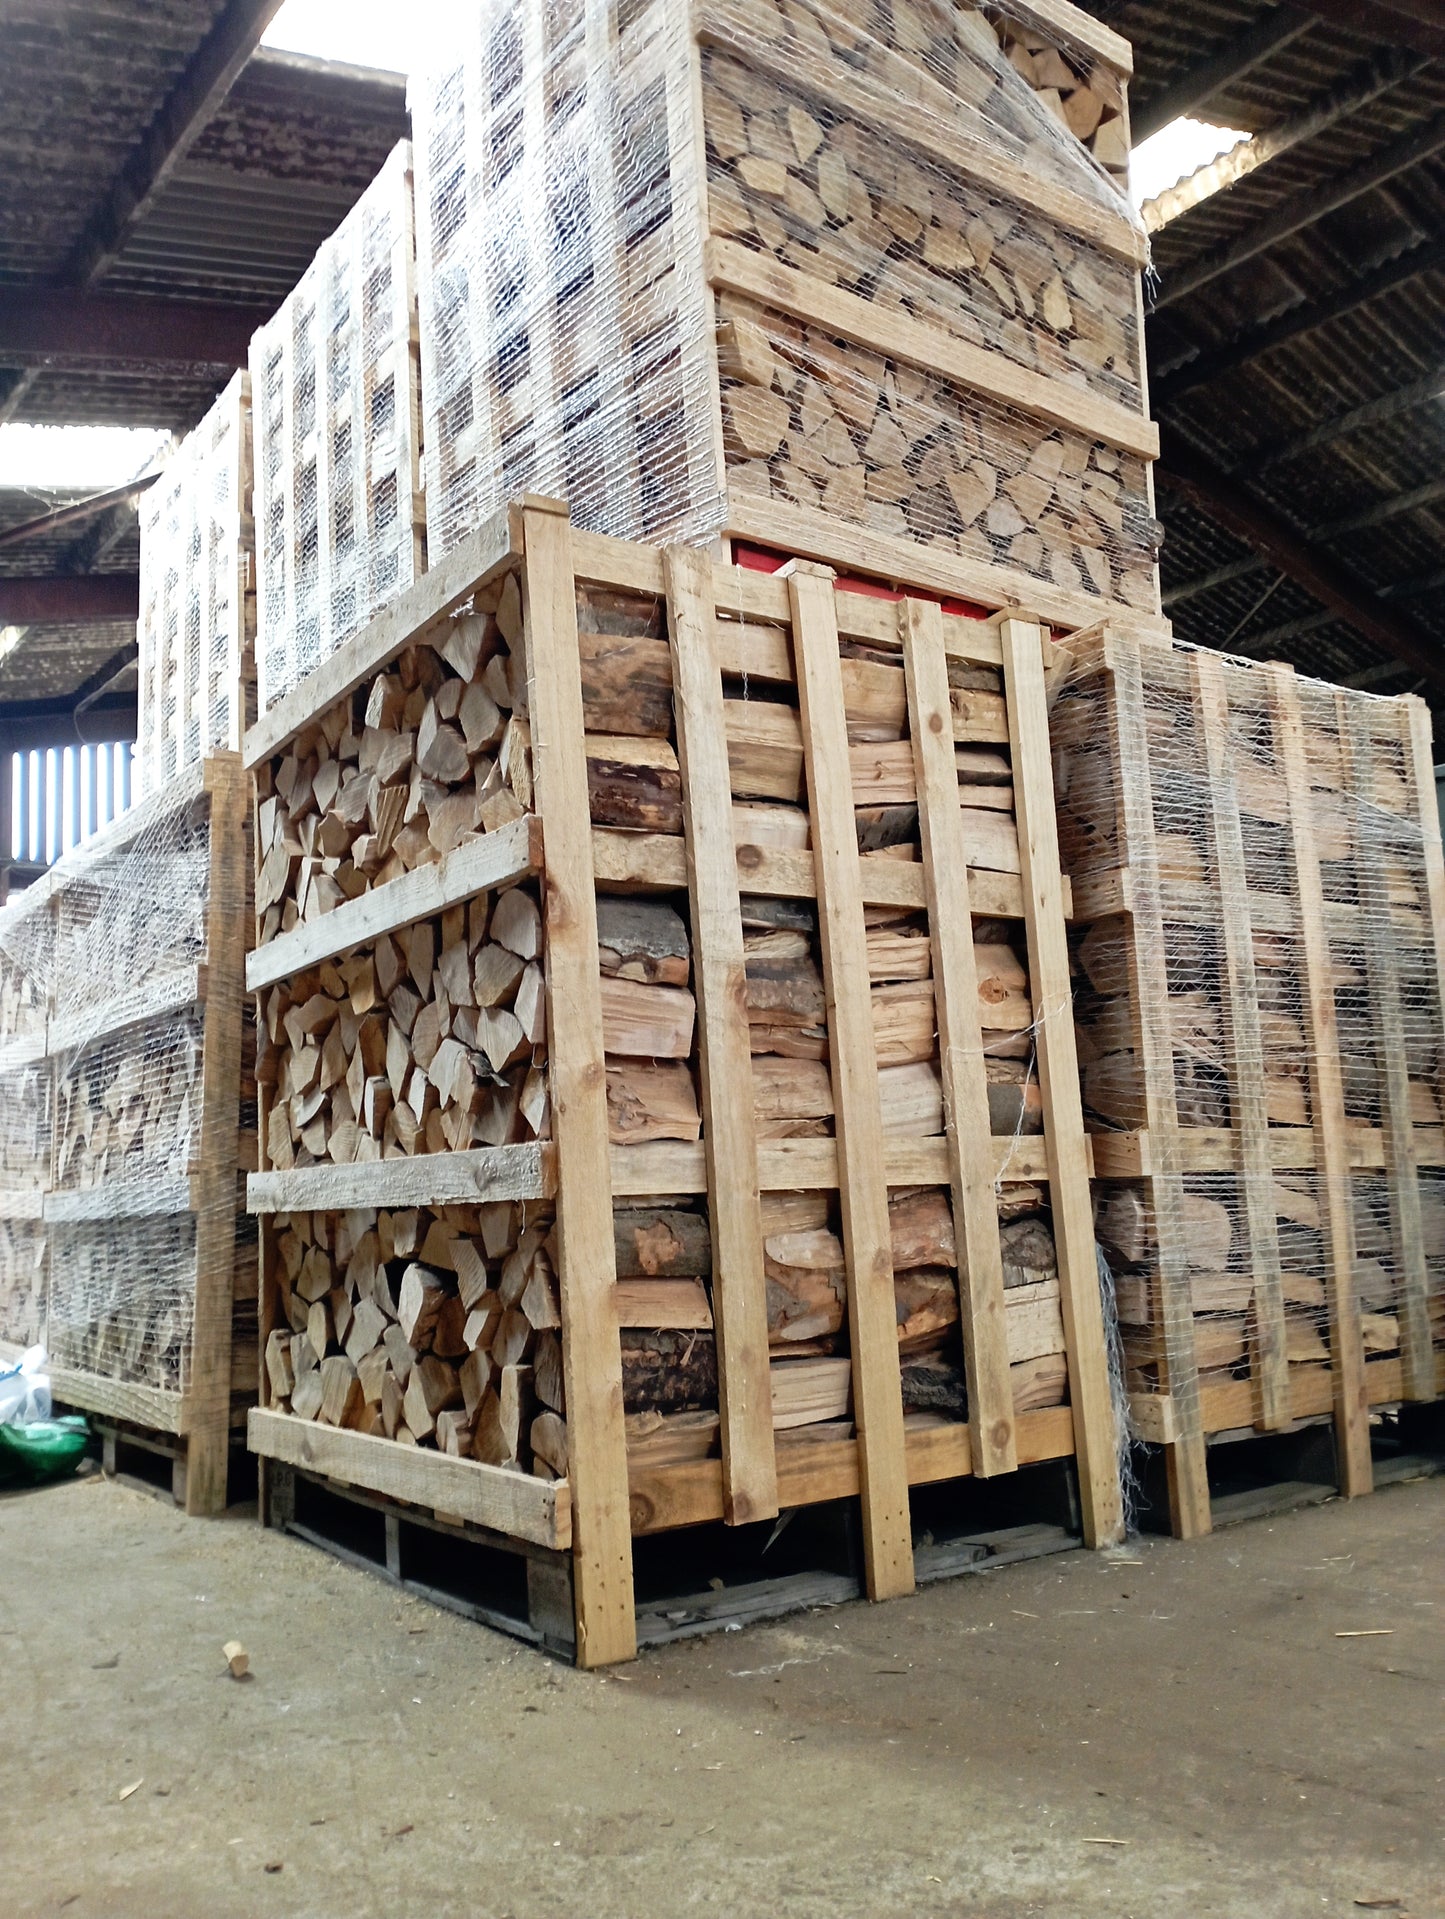 Large crate of Mixed Hardwood